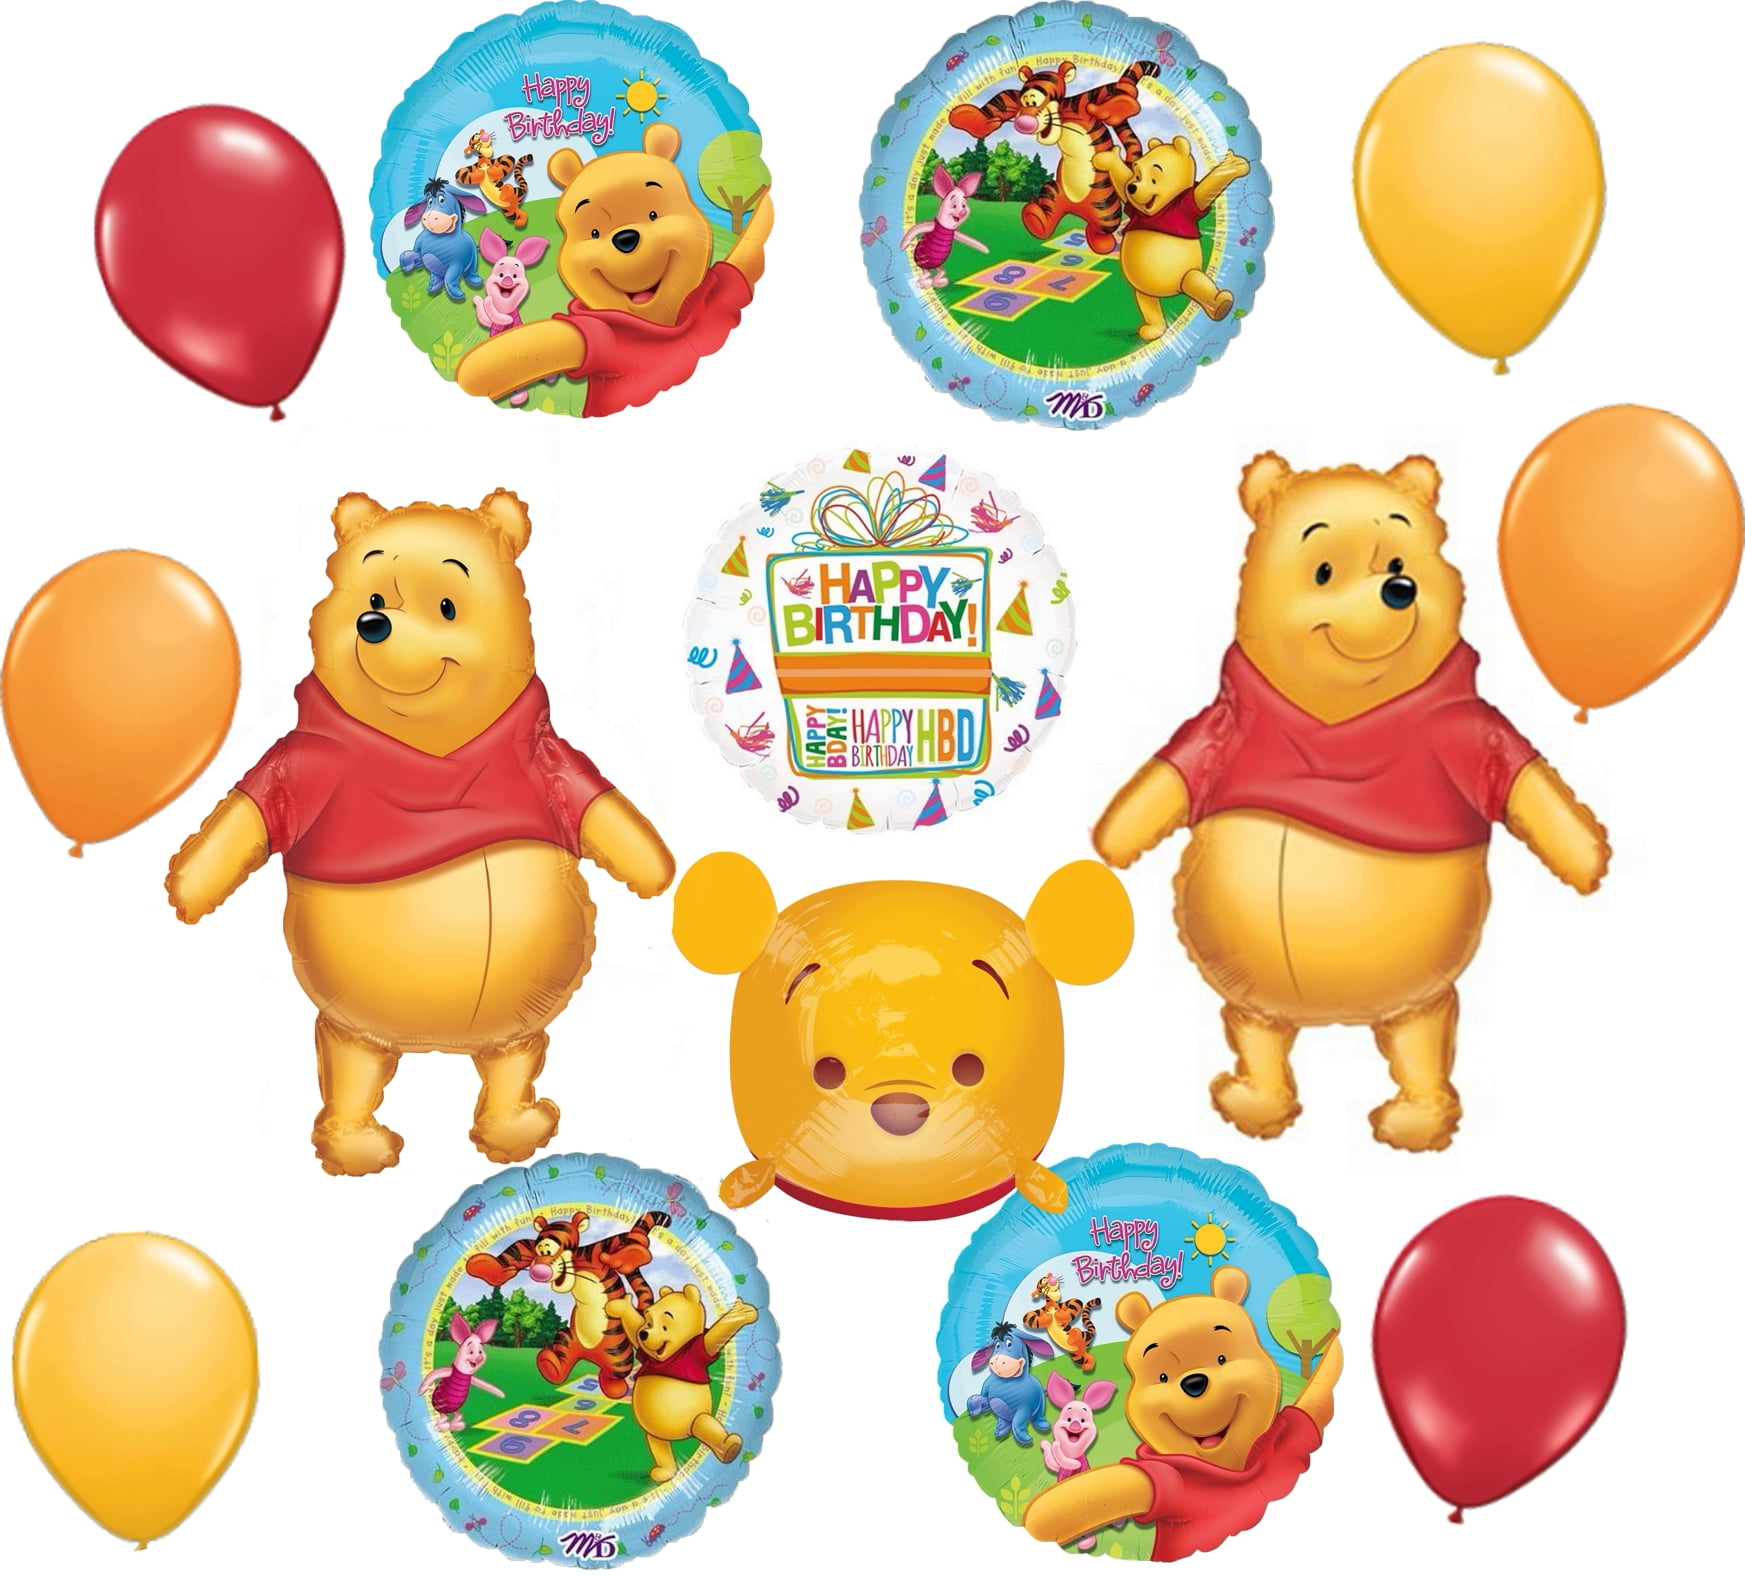 XL Sized Classic Winnie The Pooh Stickers - Winnie The Pooh Party Favors,  Winnie The Pooh Stickers Baby Shower, Winnie The Pooh Gifts, Winnie The  Pooh